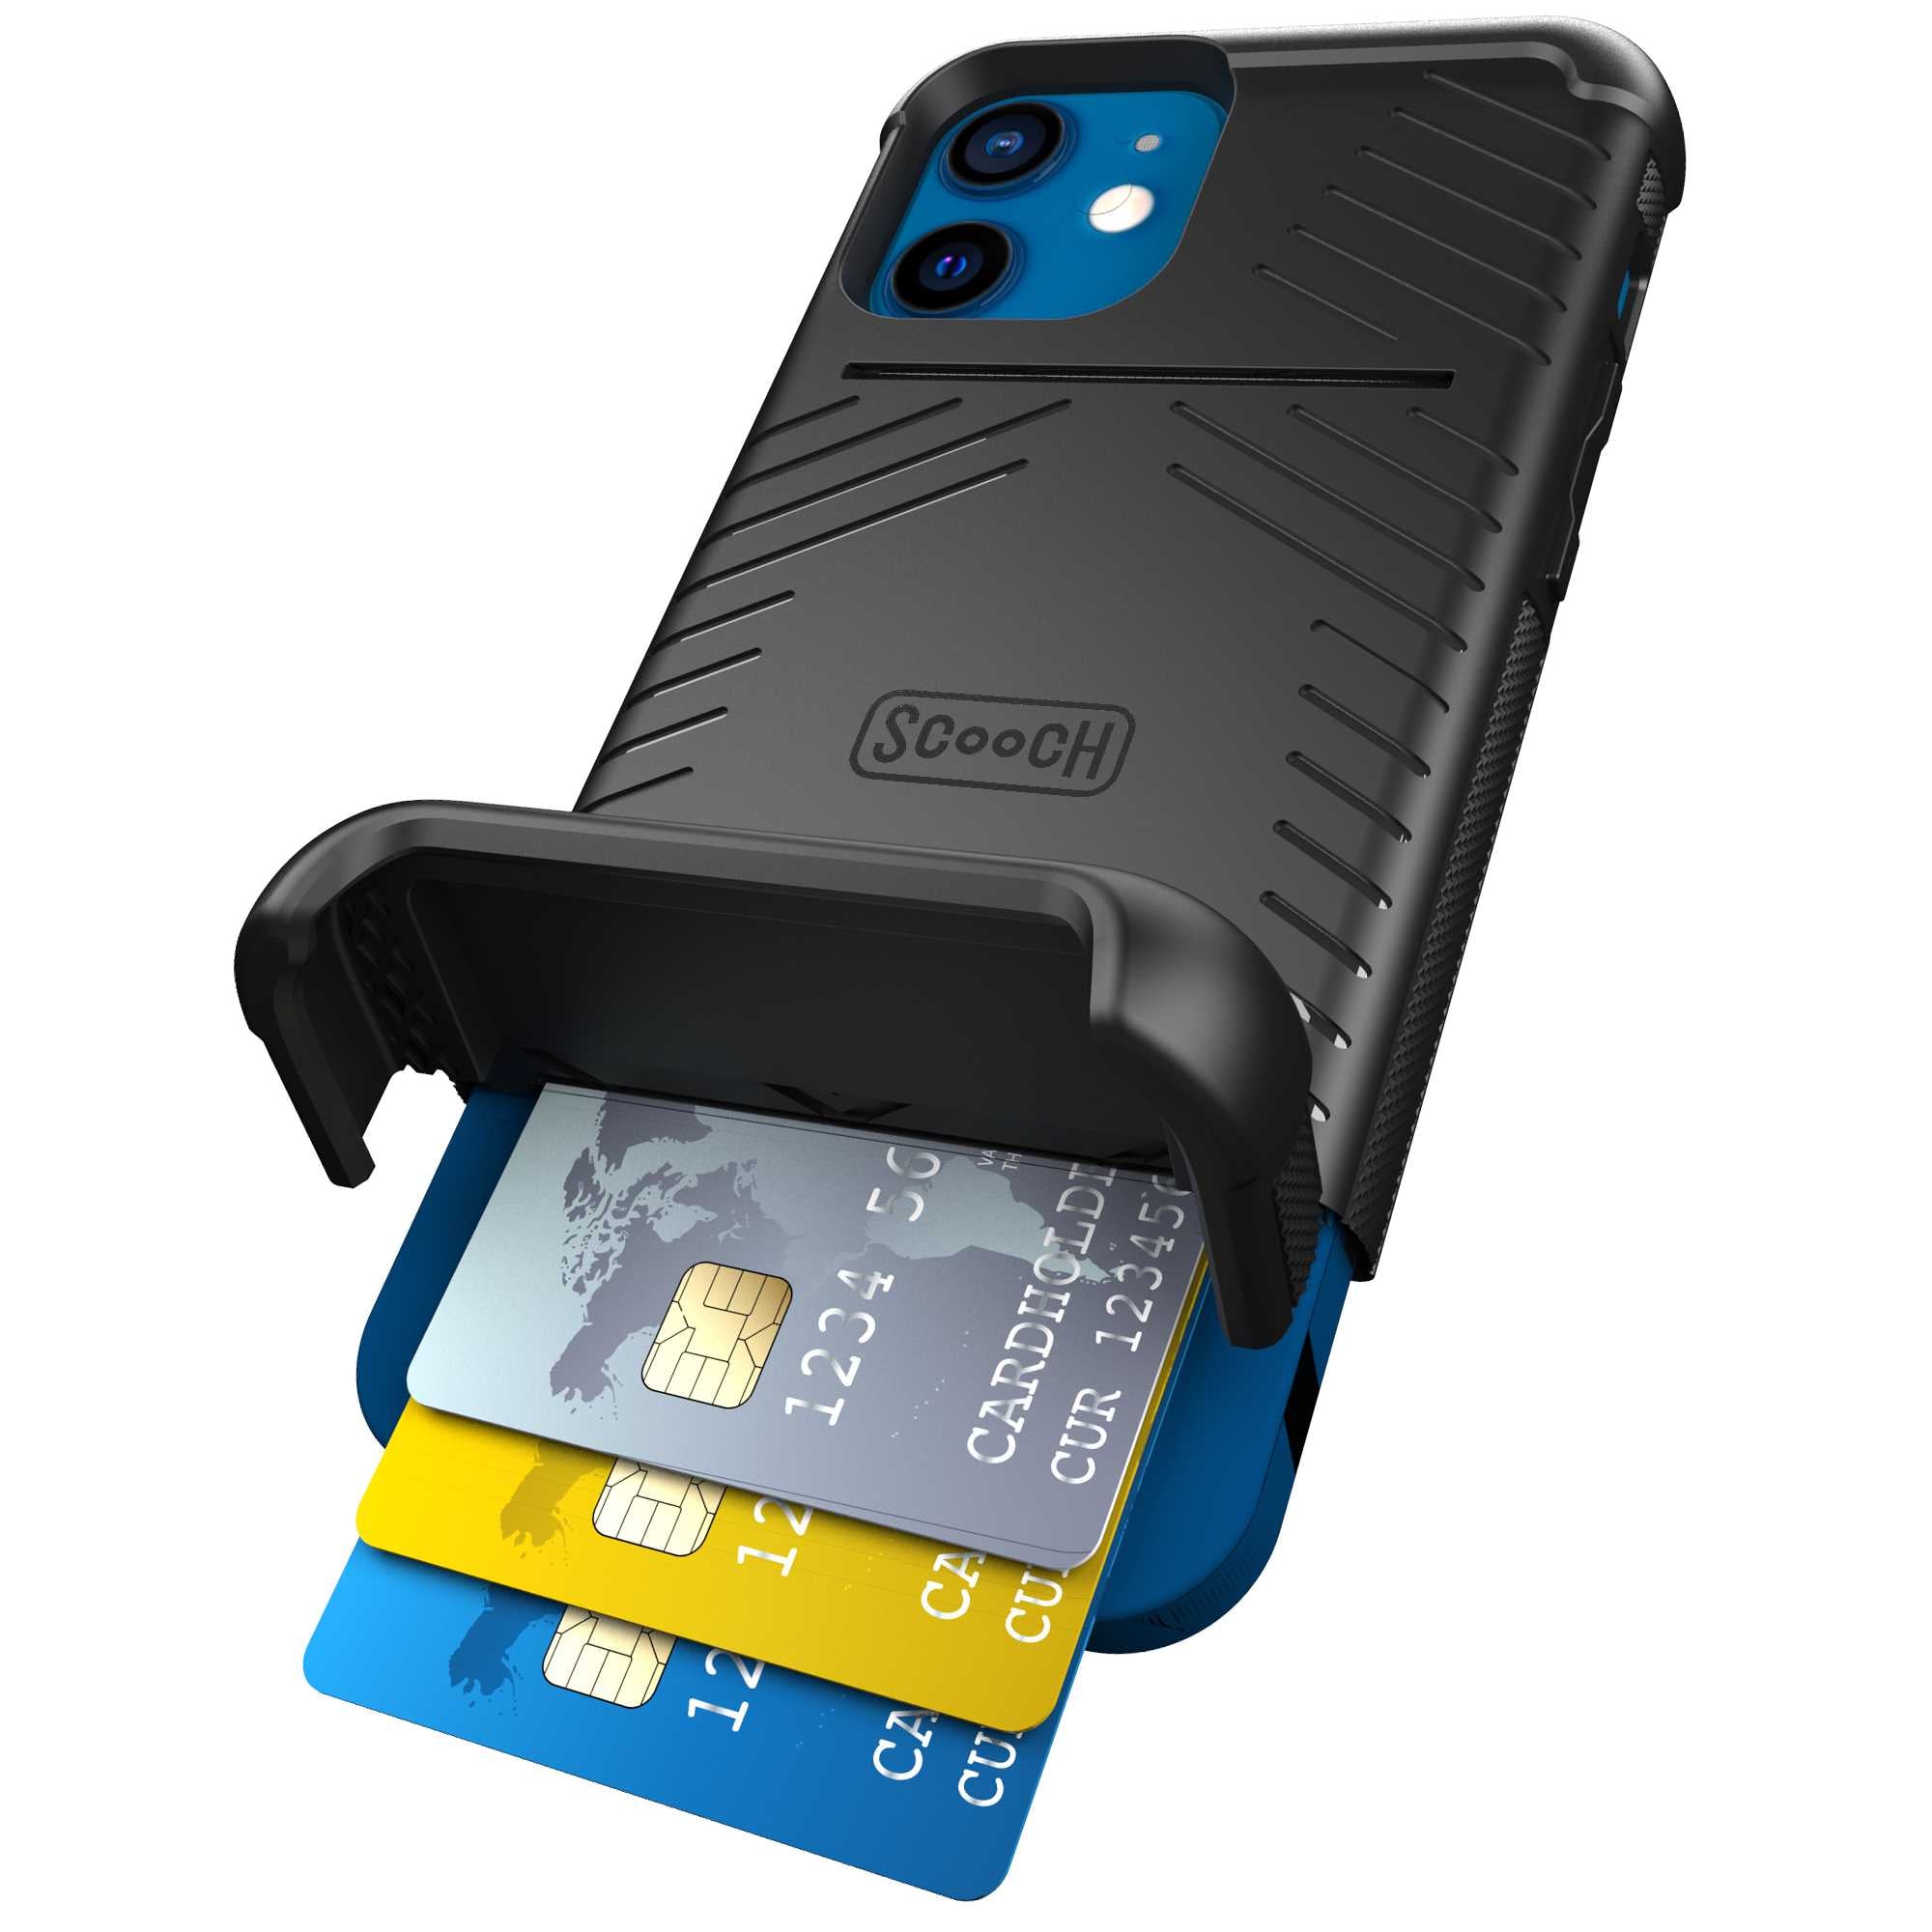 wallet case iphone